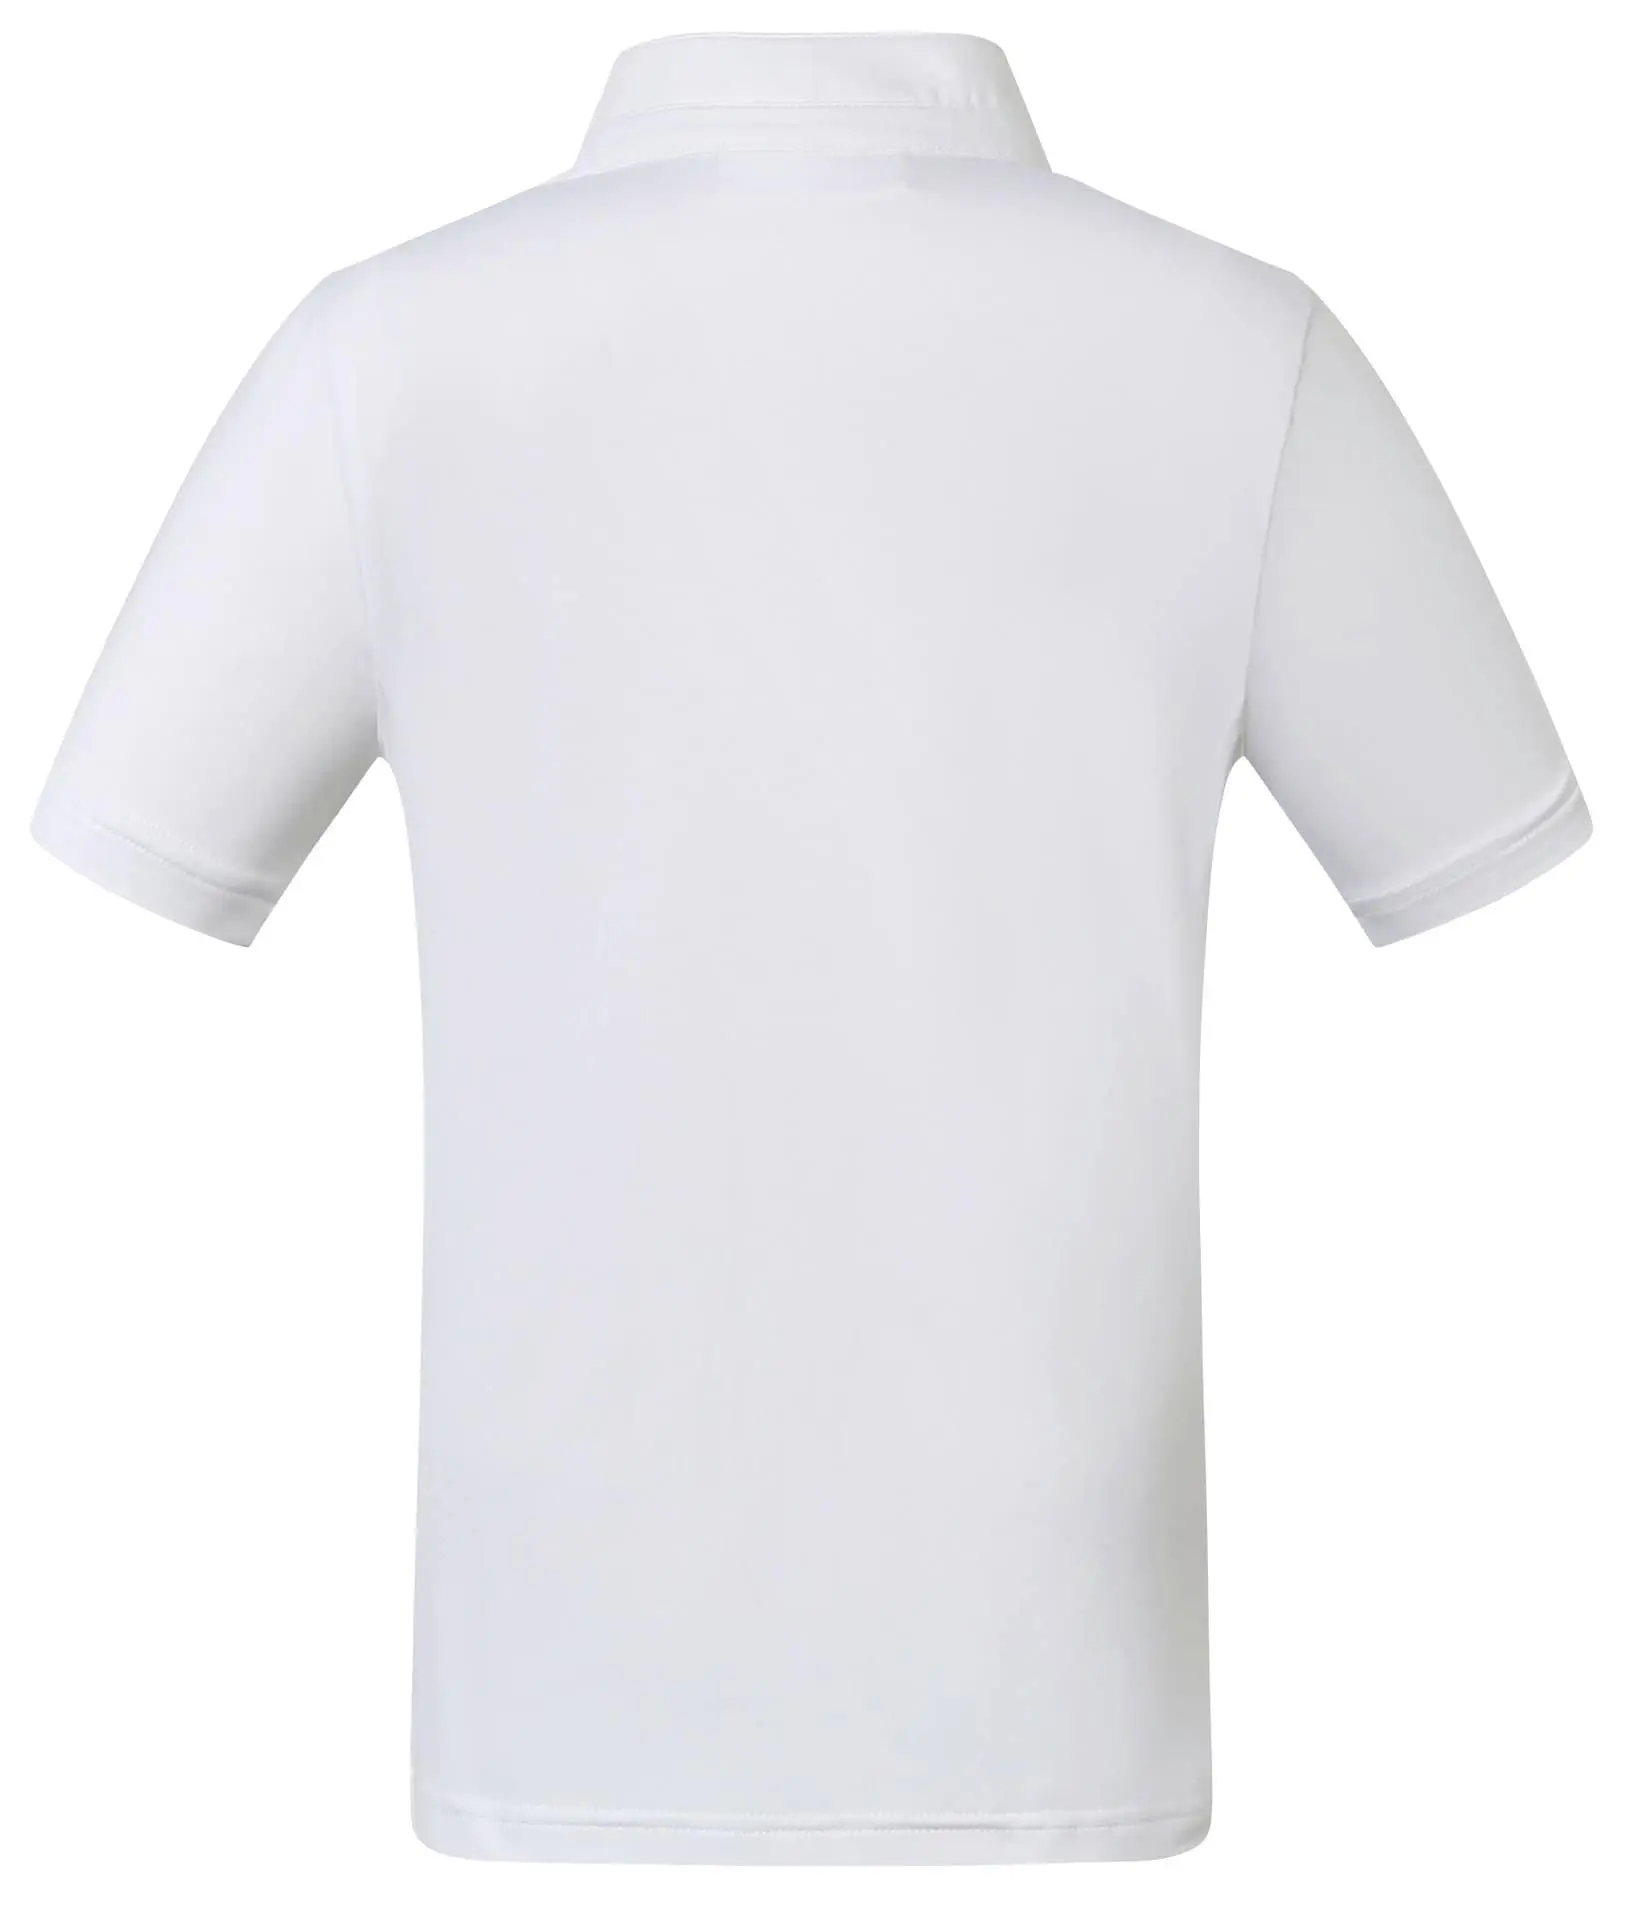 Competition Shirt Children, white, 140/146